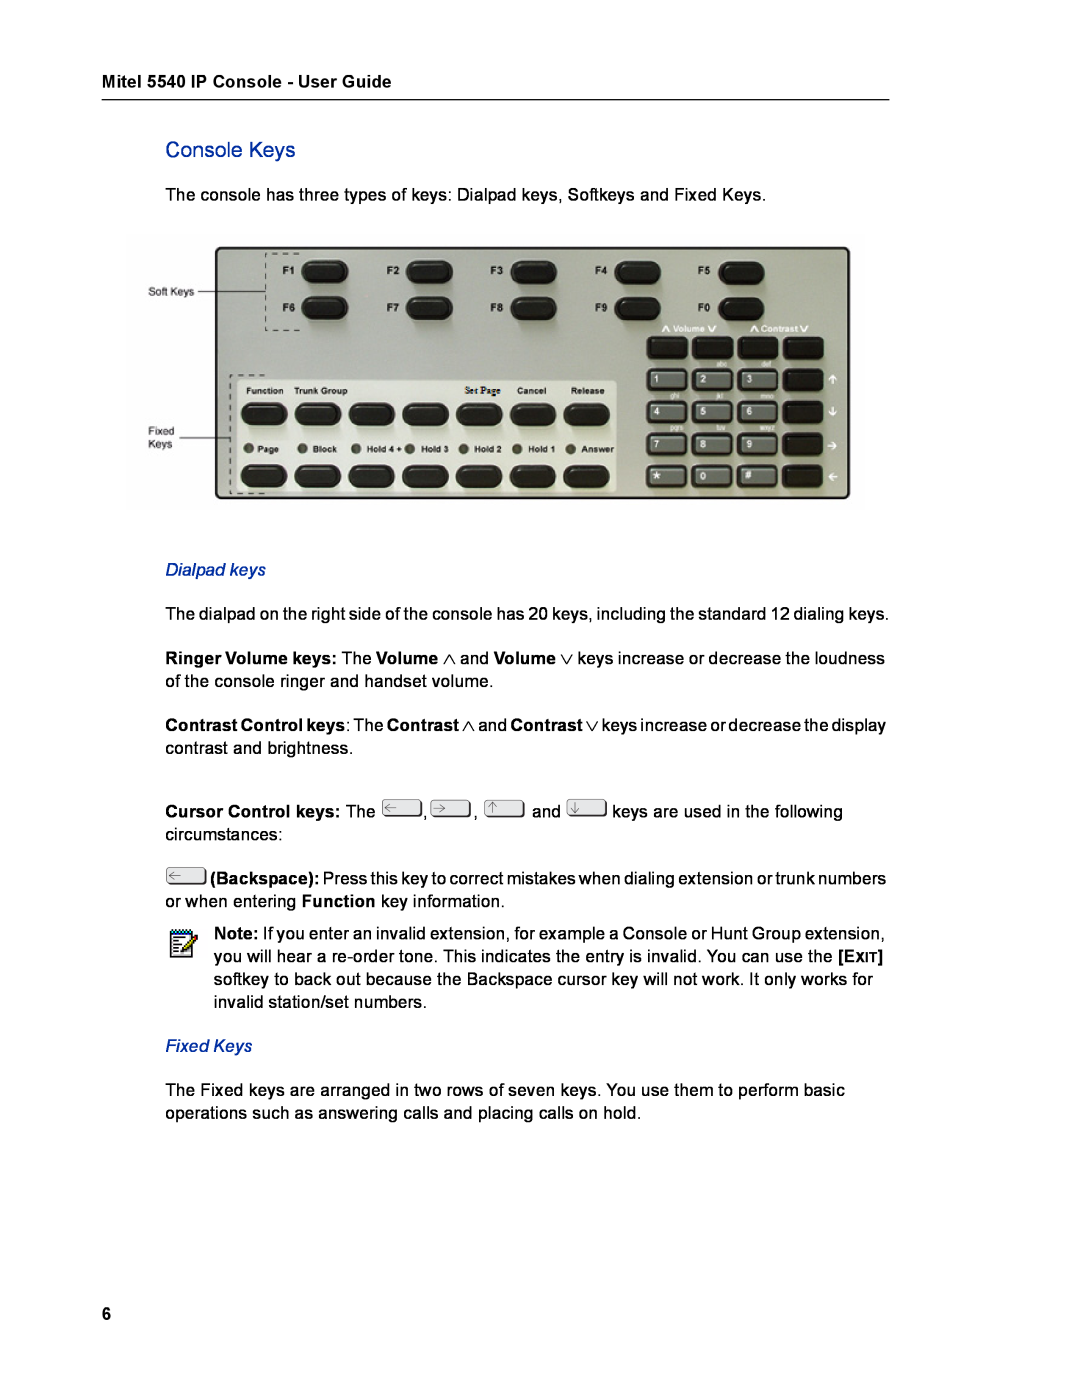 Mitel manual Console Keys, Mitel 5540 IP Console - User Guide 